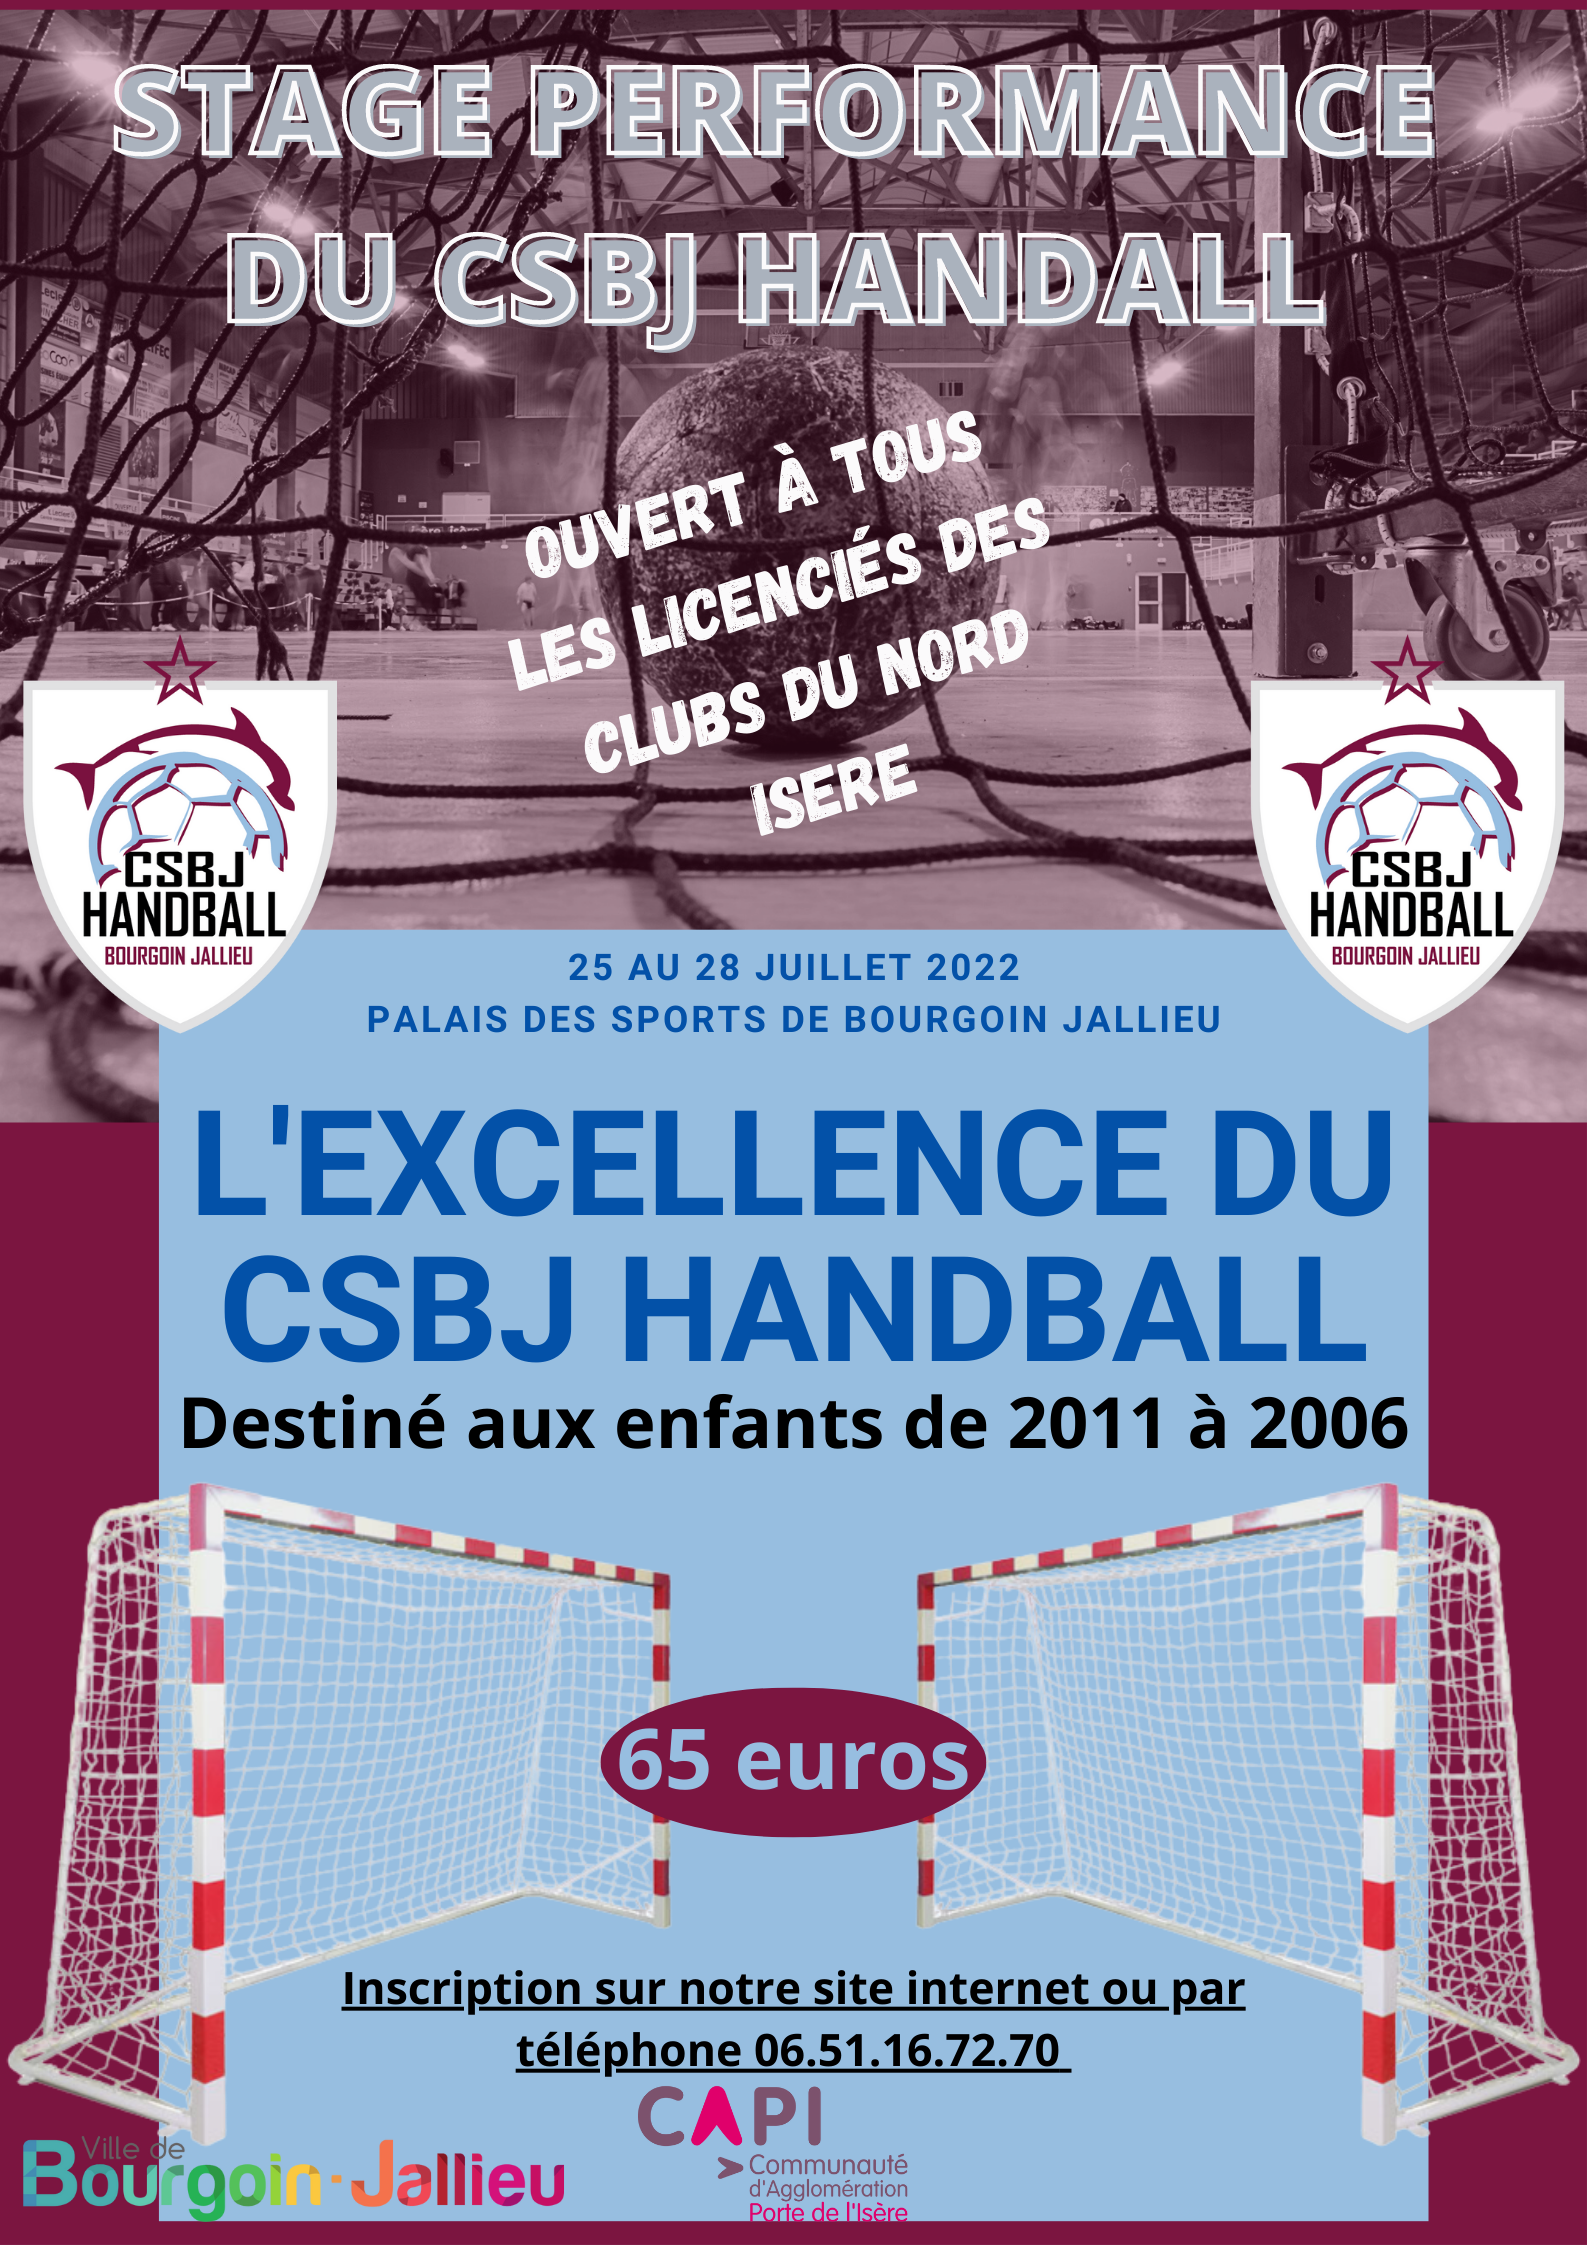 Stages Perfectionnement du CSBJ handball U13/U15/U18